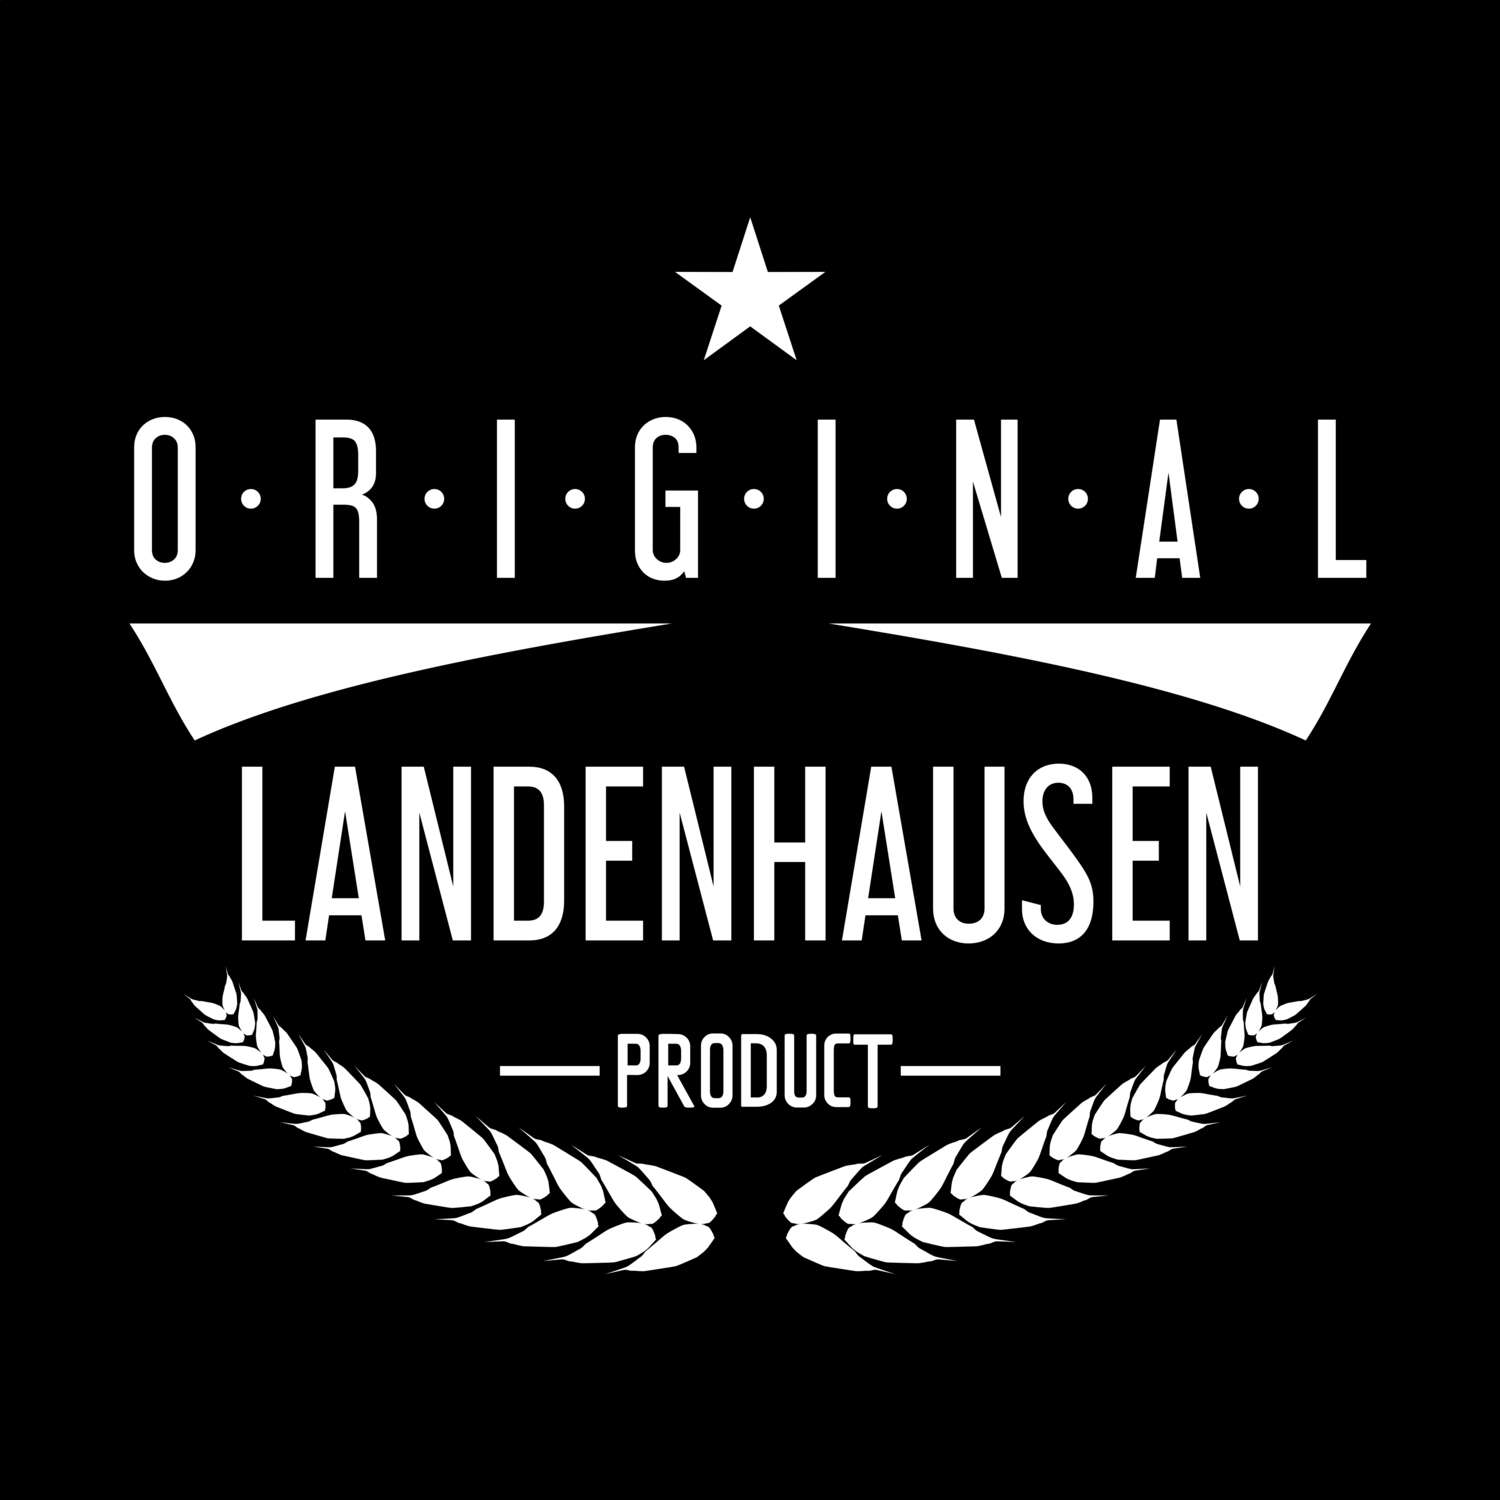 Landenhausen T-Shirt »Original Product«